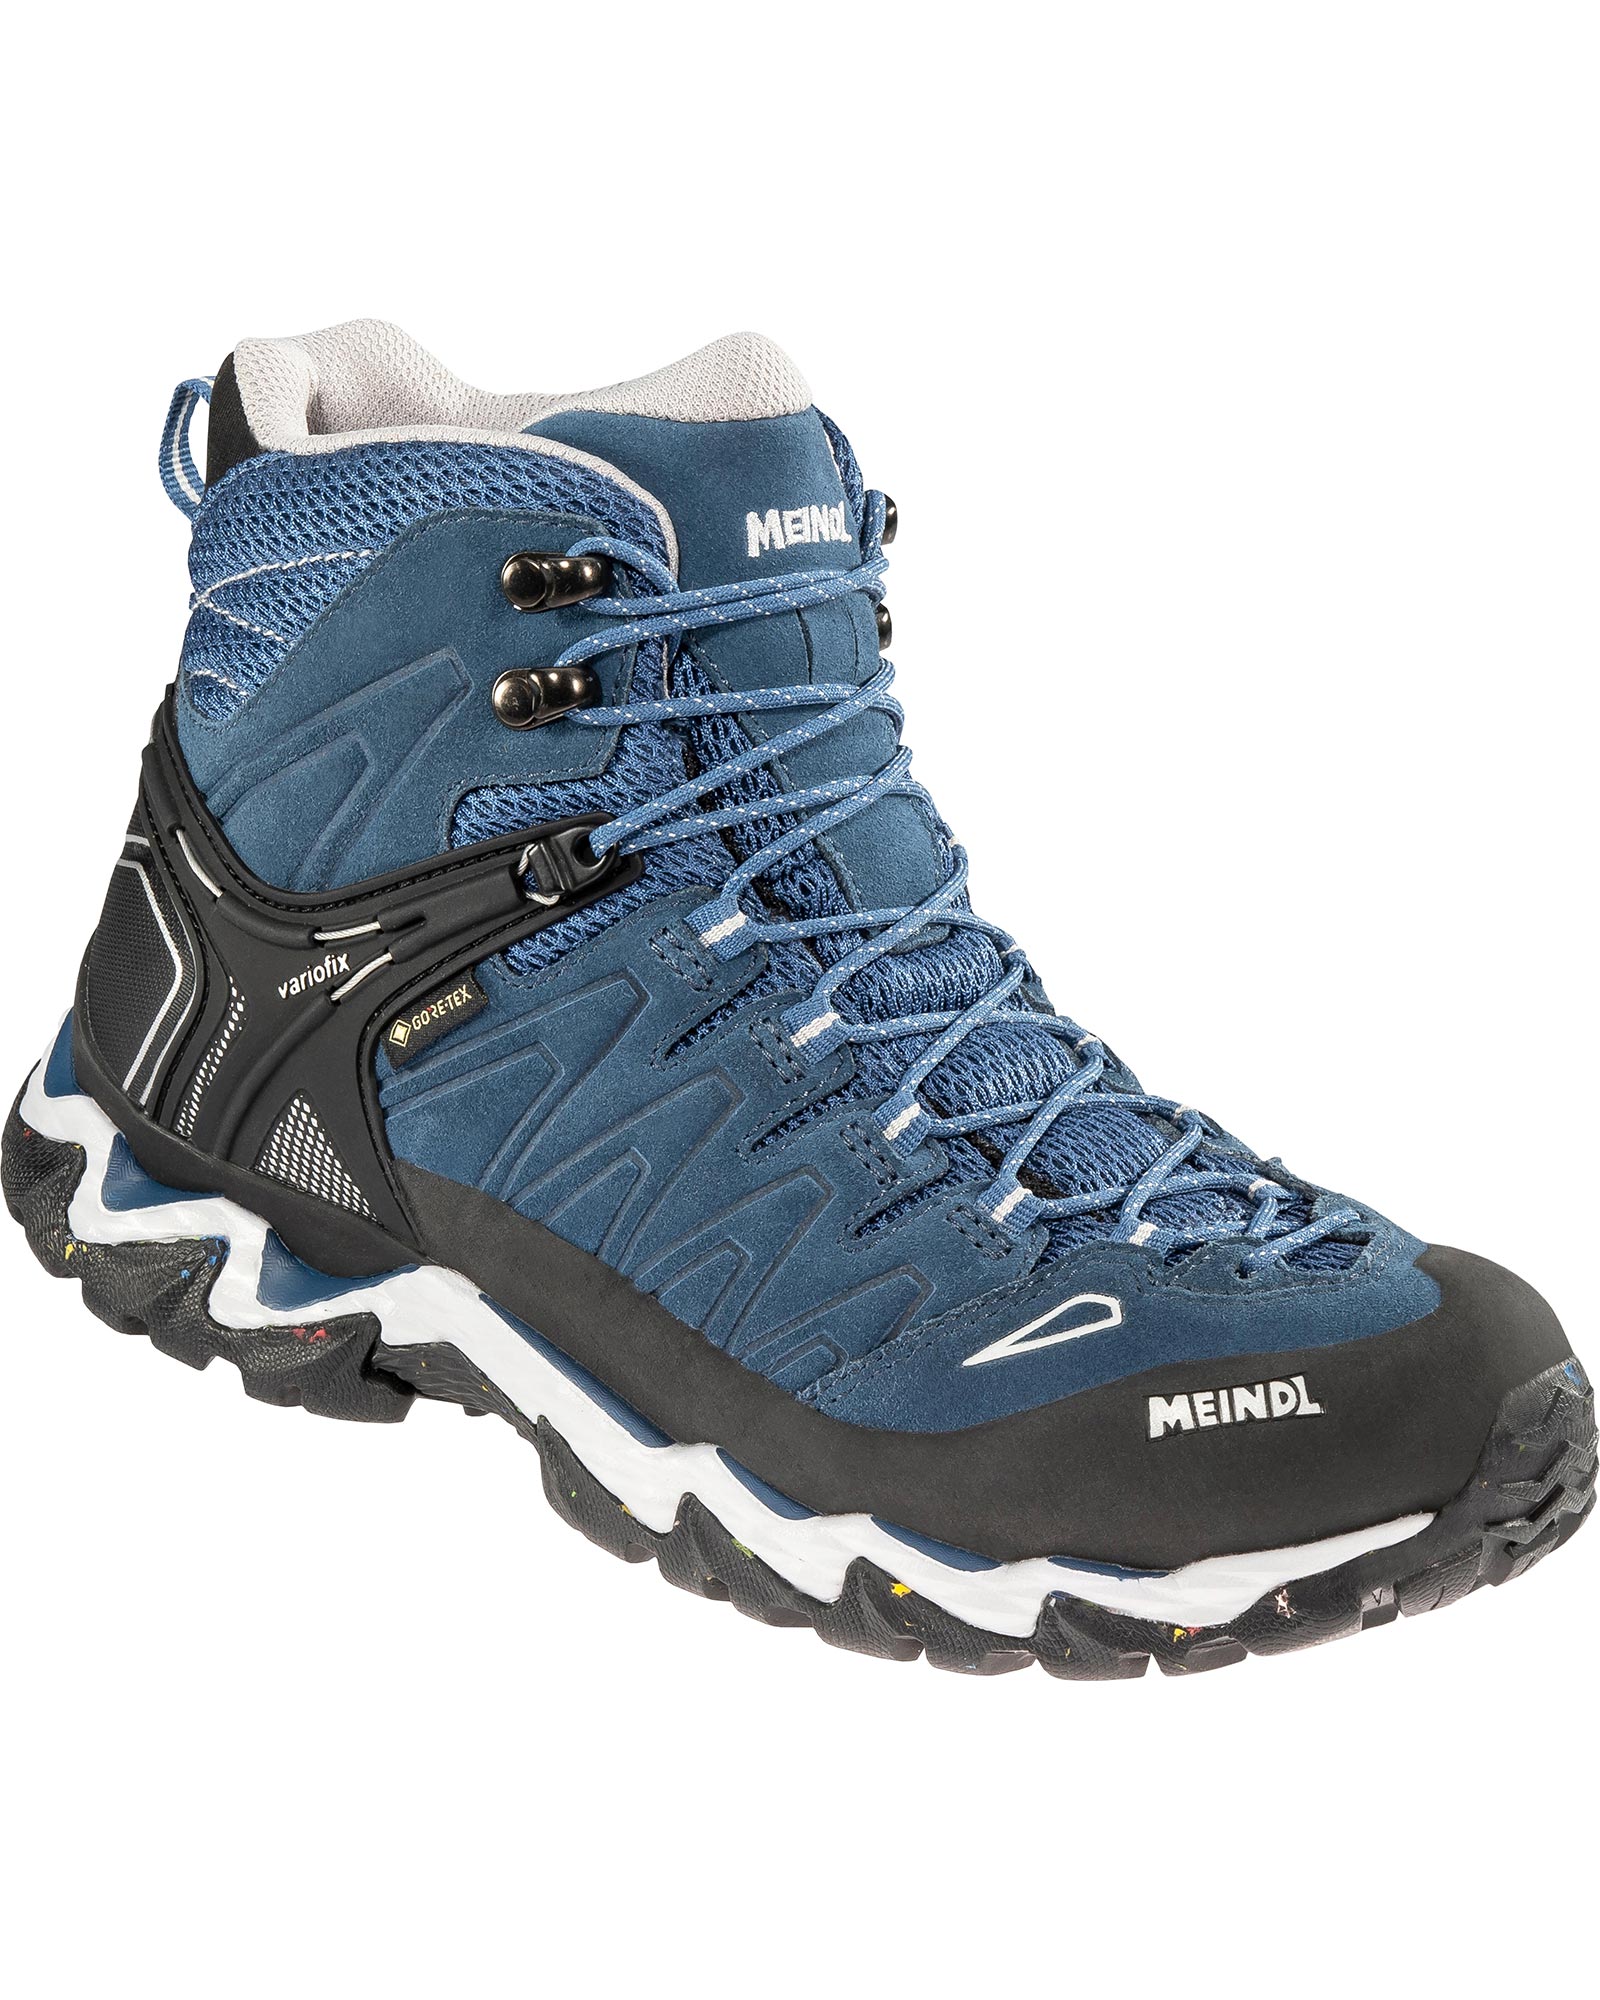 Meindl Lite Hike GORE TEX Women’s Boots - Blue/Light Blue UK 7.5